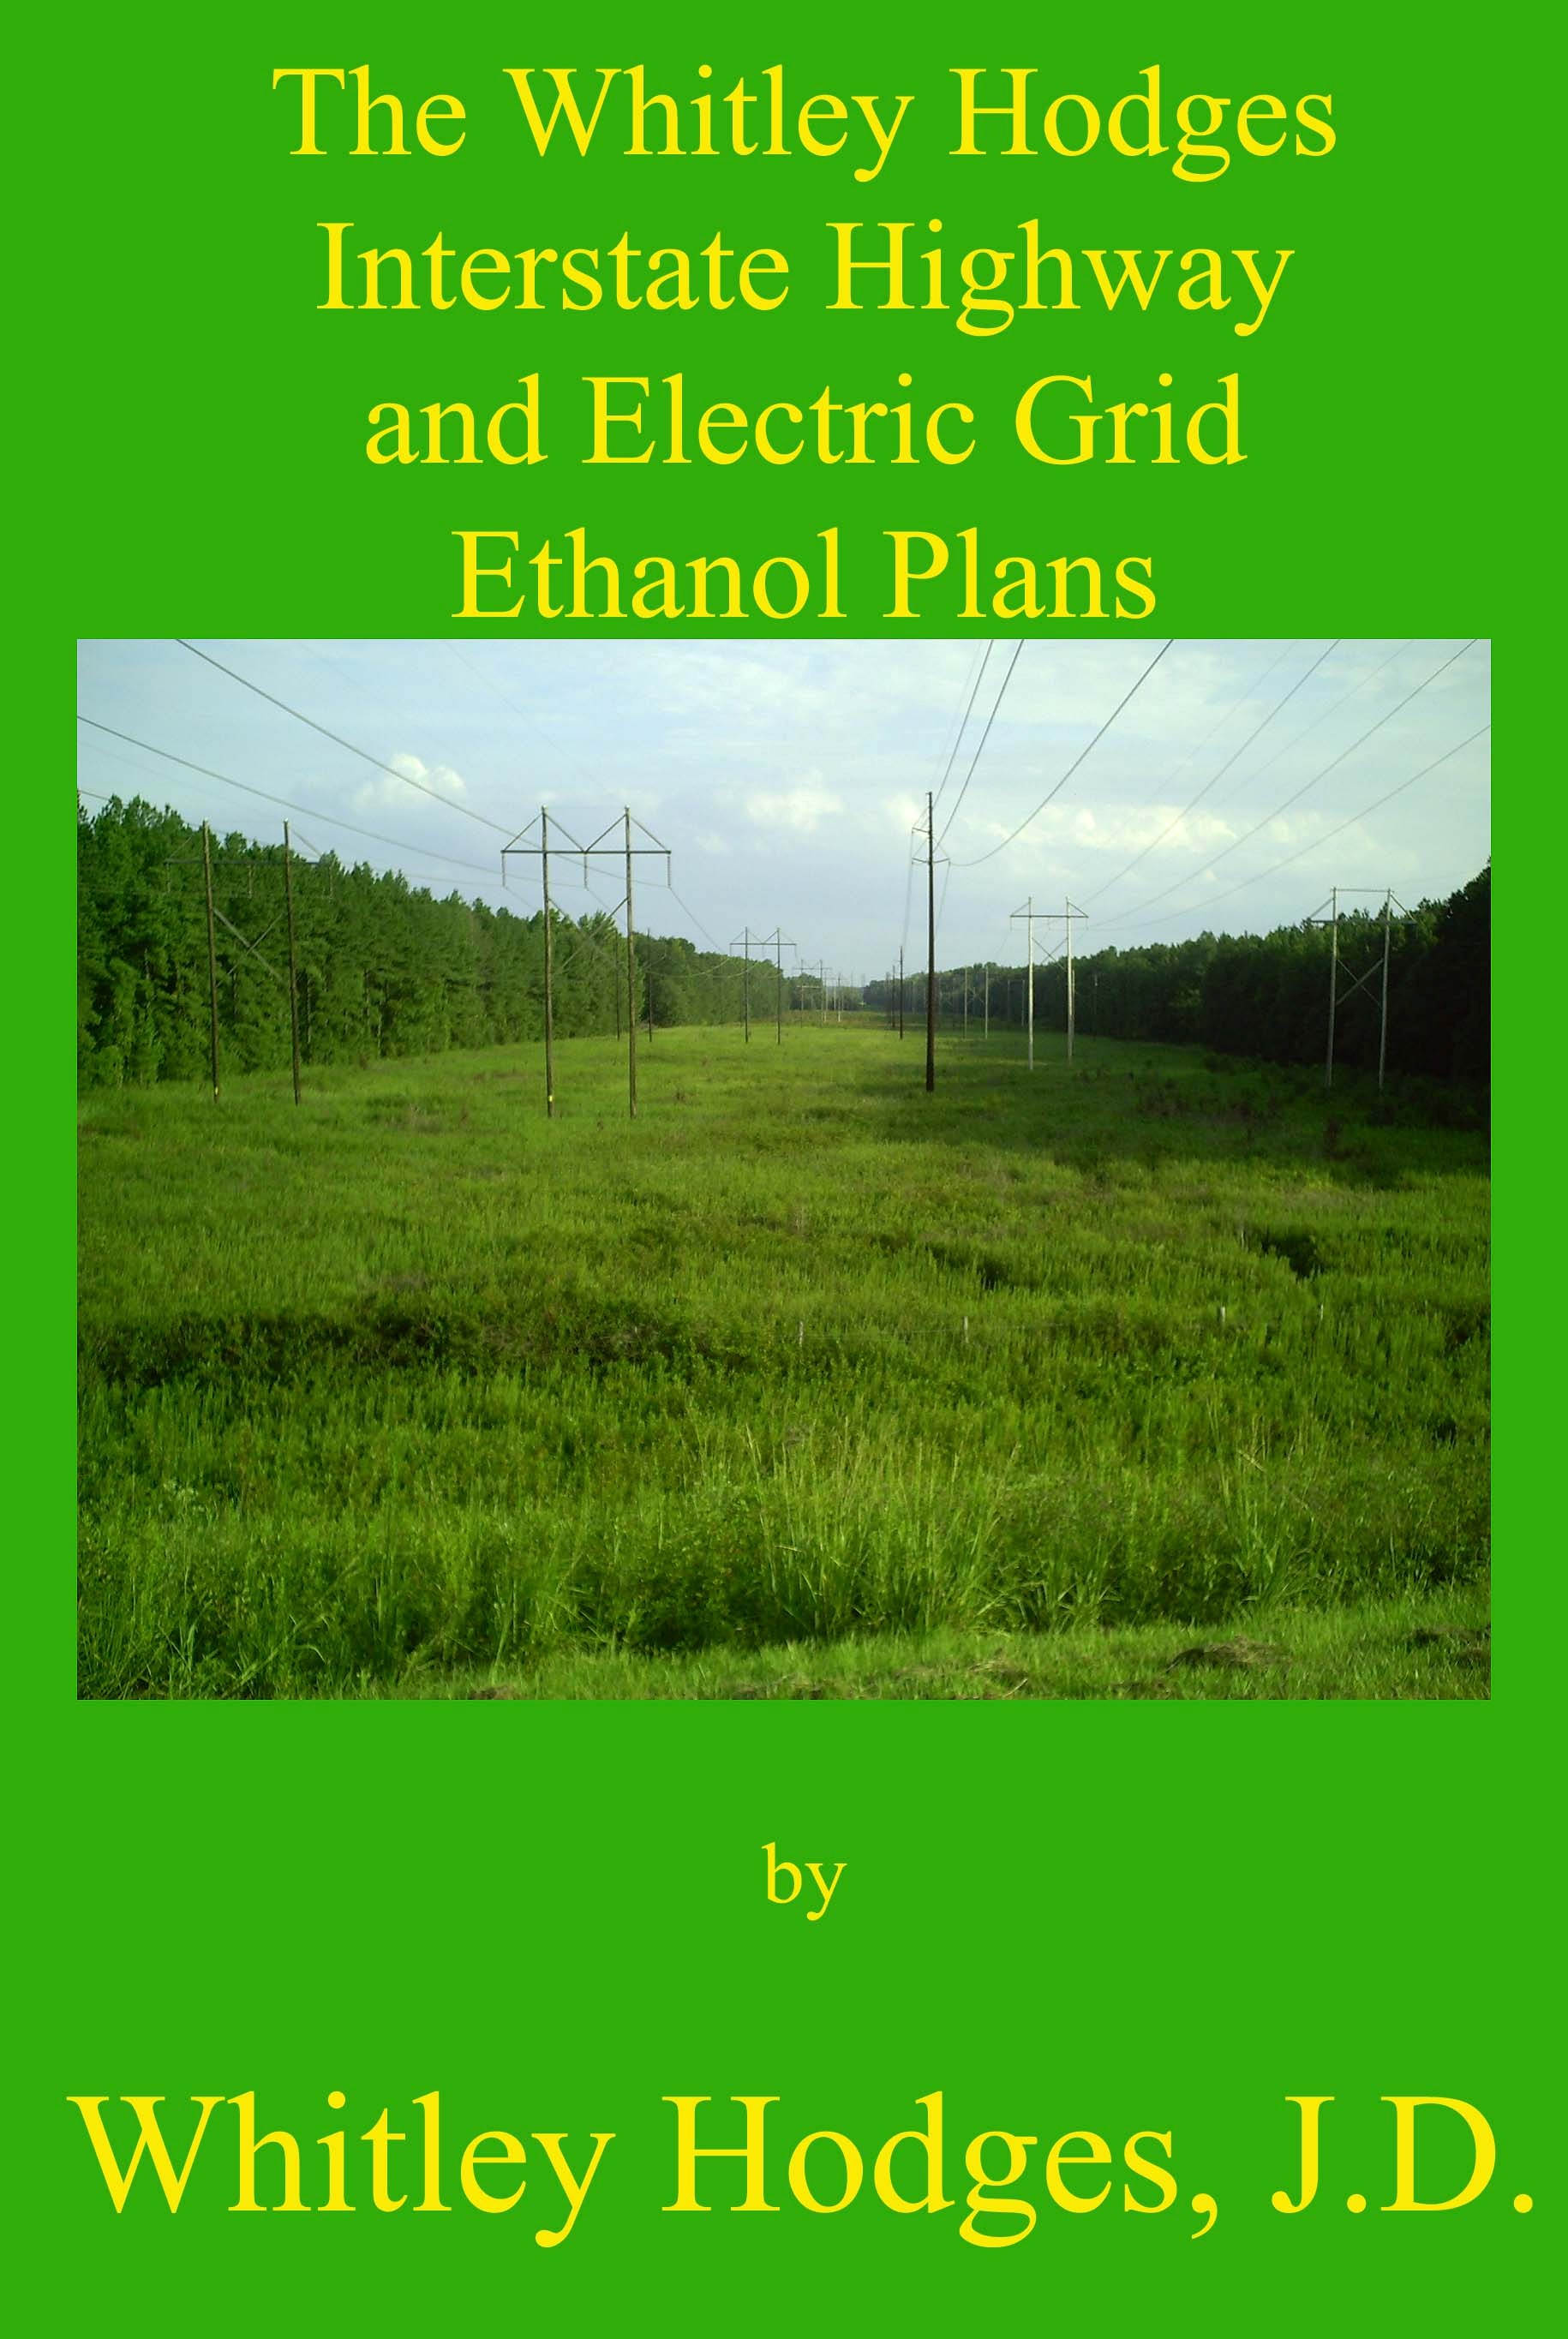 ethanolcom.jpg